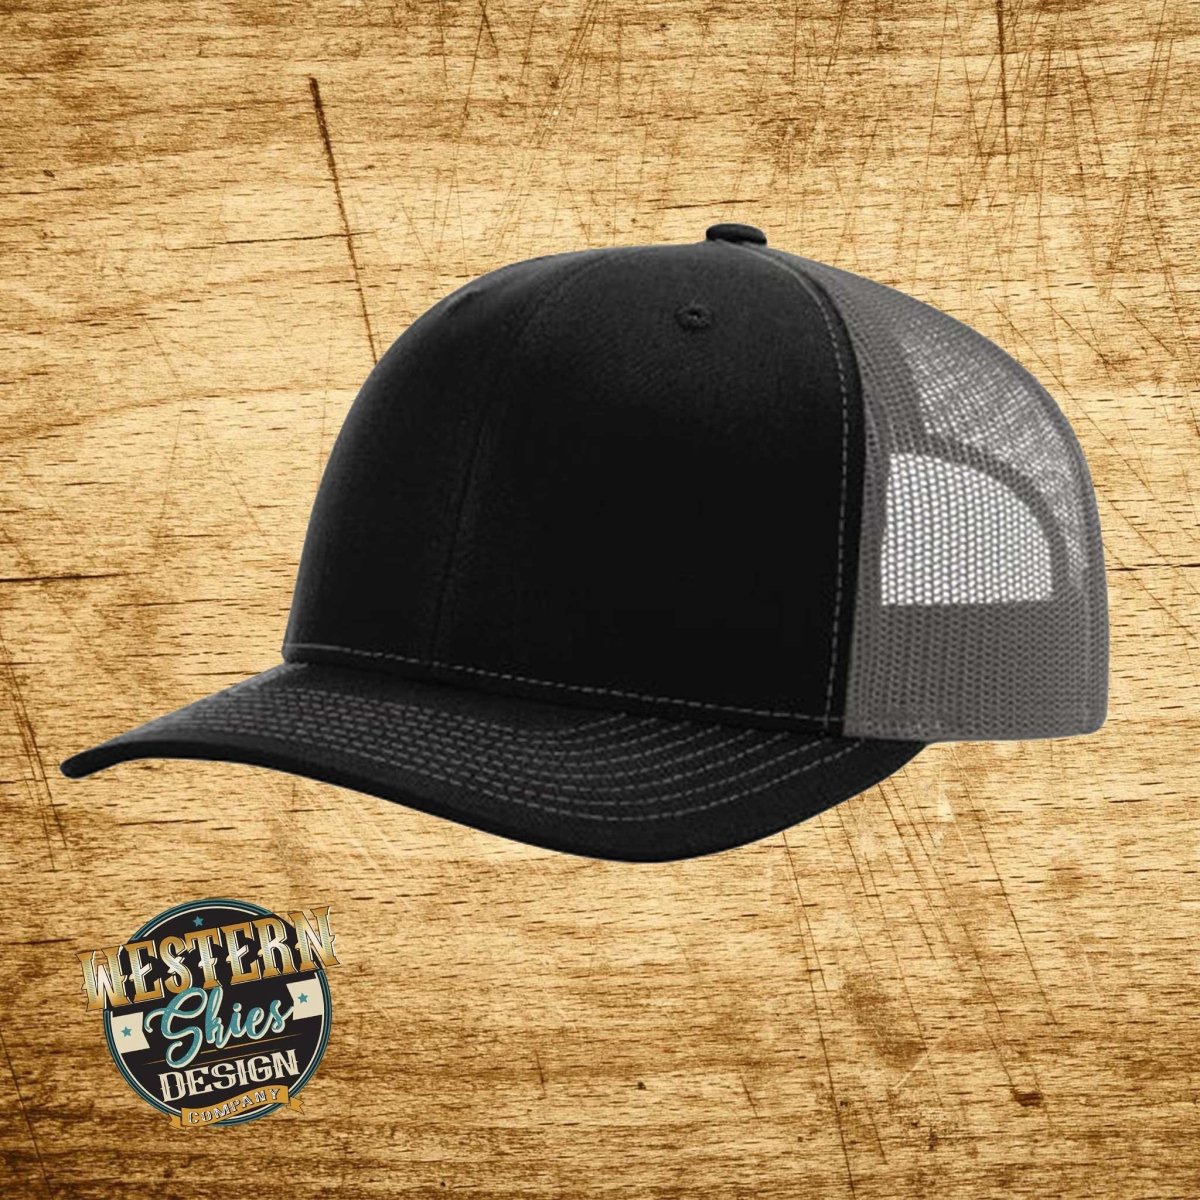 Richardson 112 Trucker Mesh SnapBack Hat